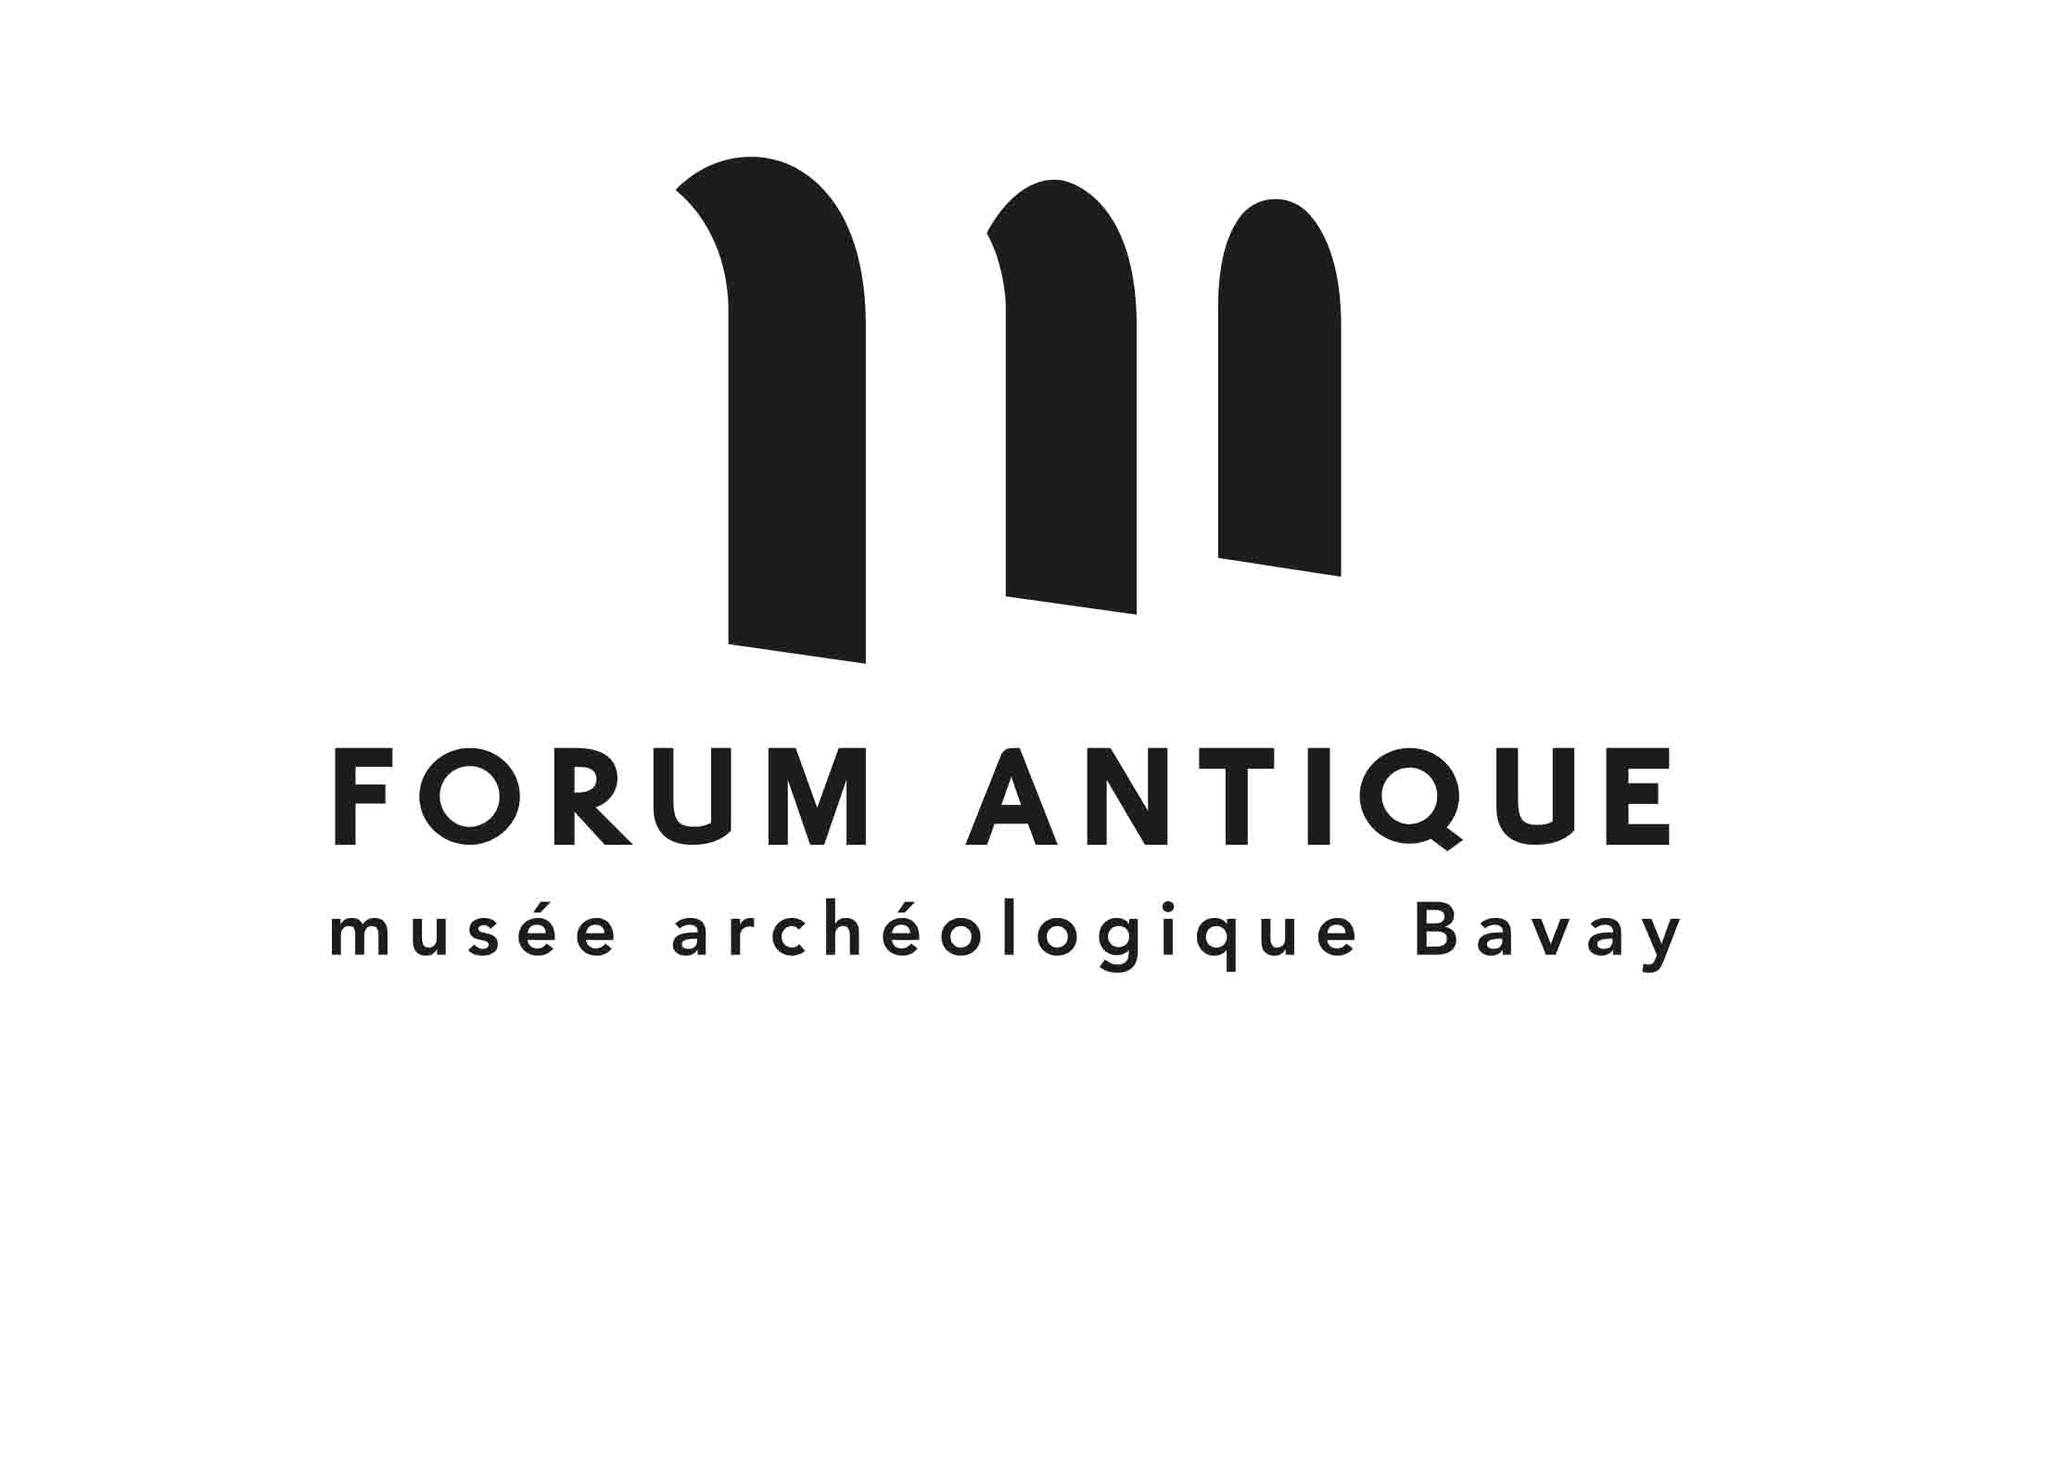 Forum antique Bavay